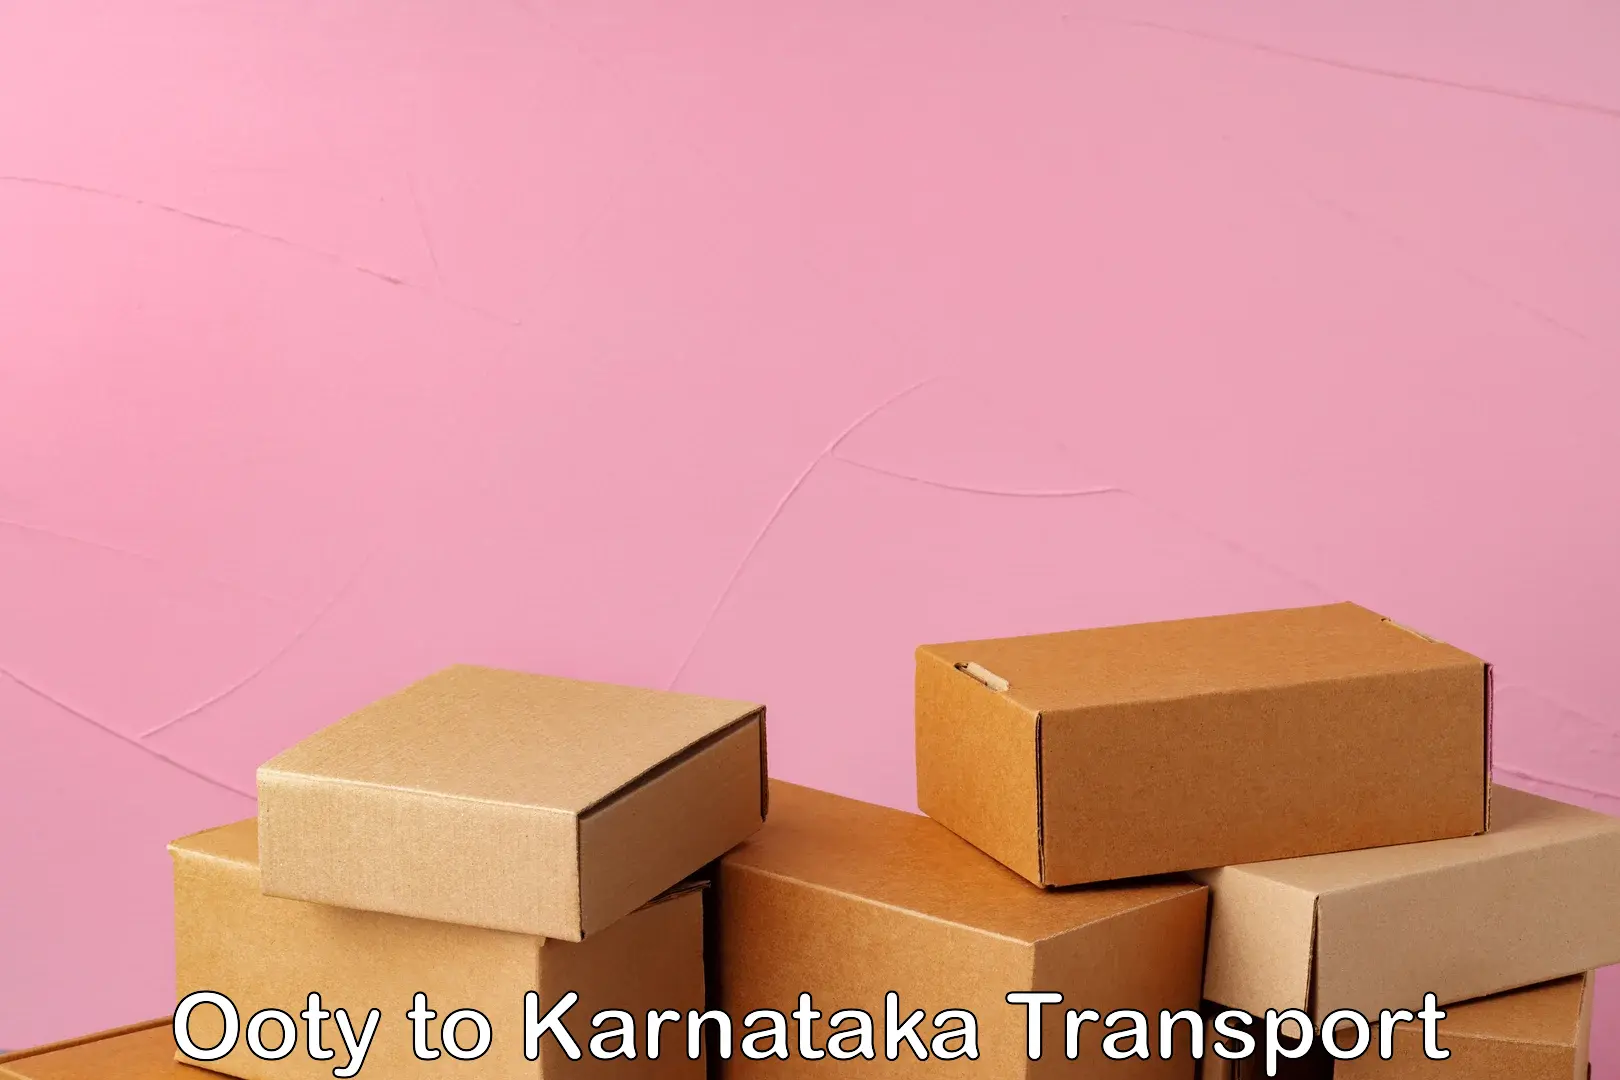 Furniture transport service Ooty to Karnataka